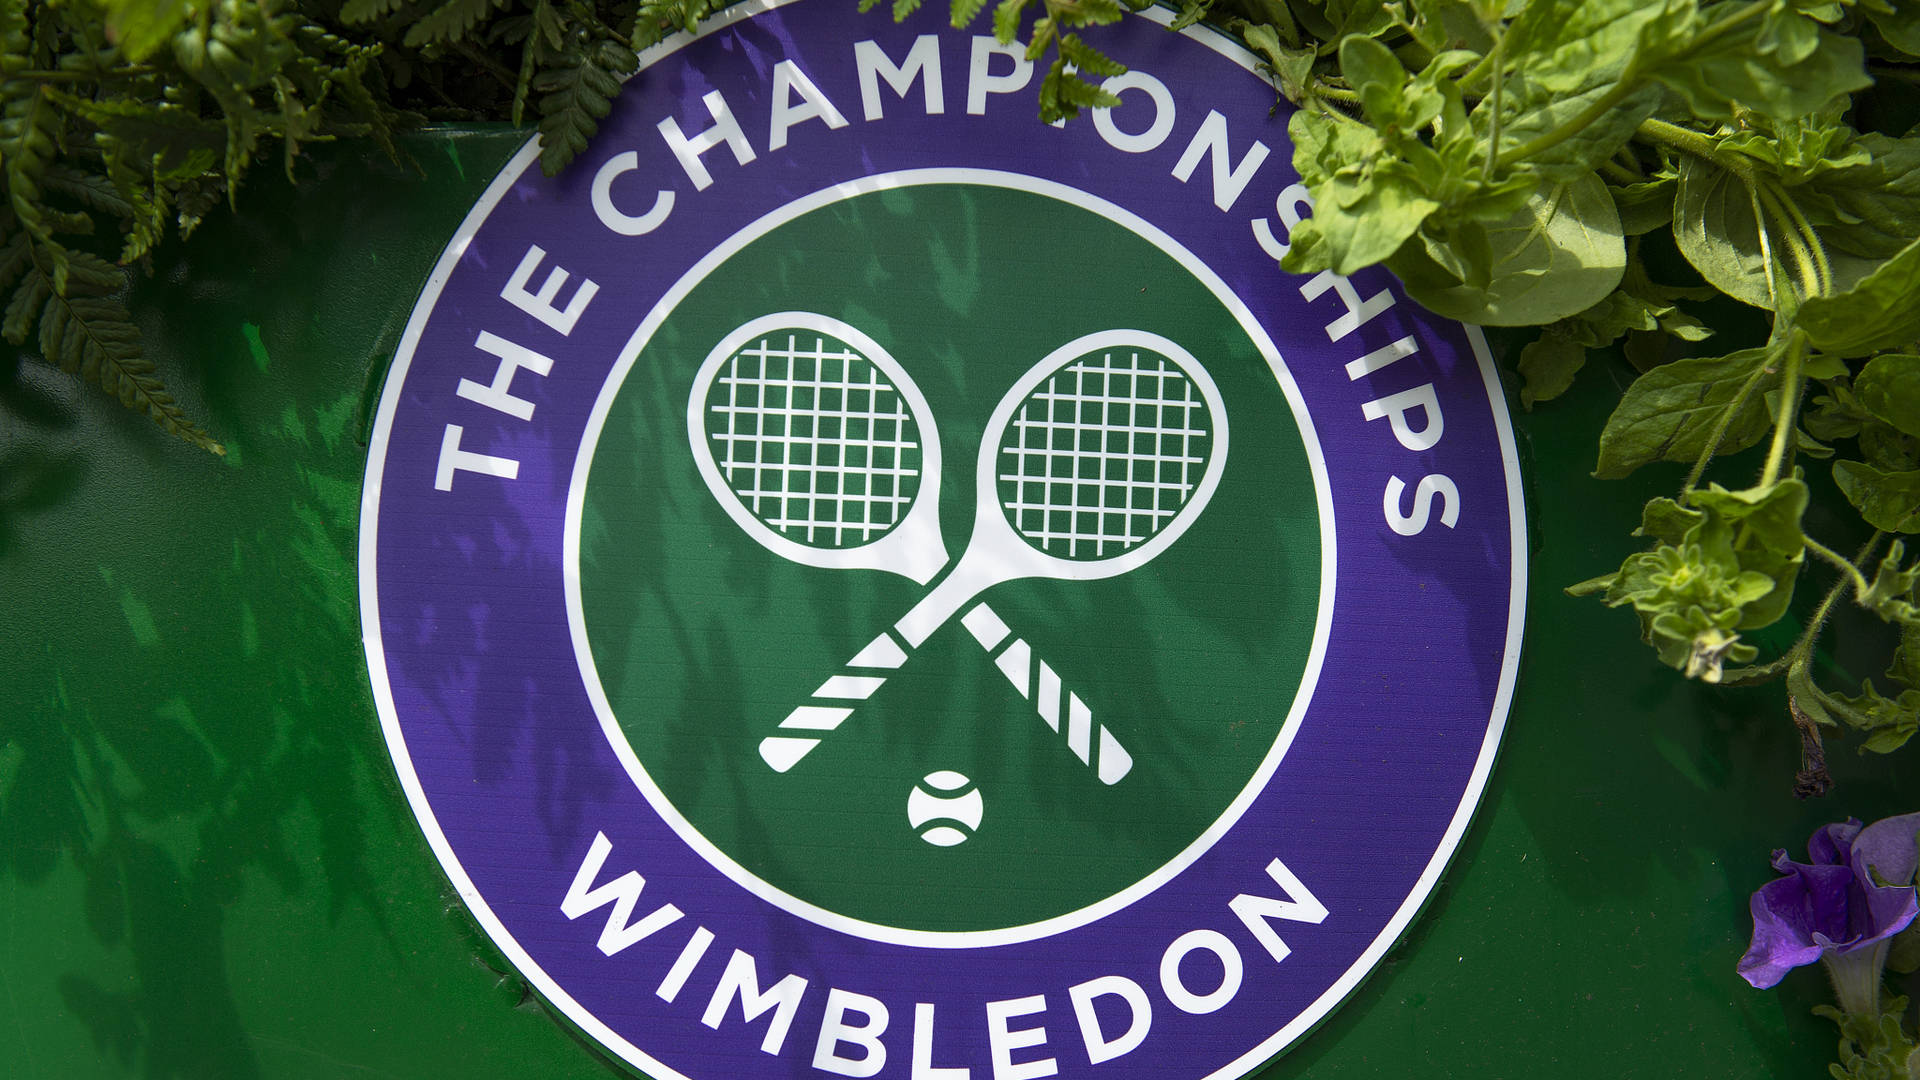 Wimbledon Logo With White Tennis Racket Background